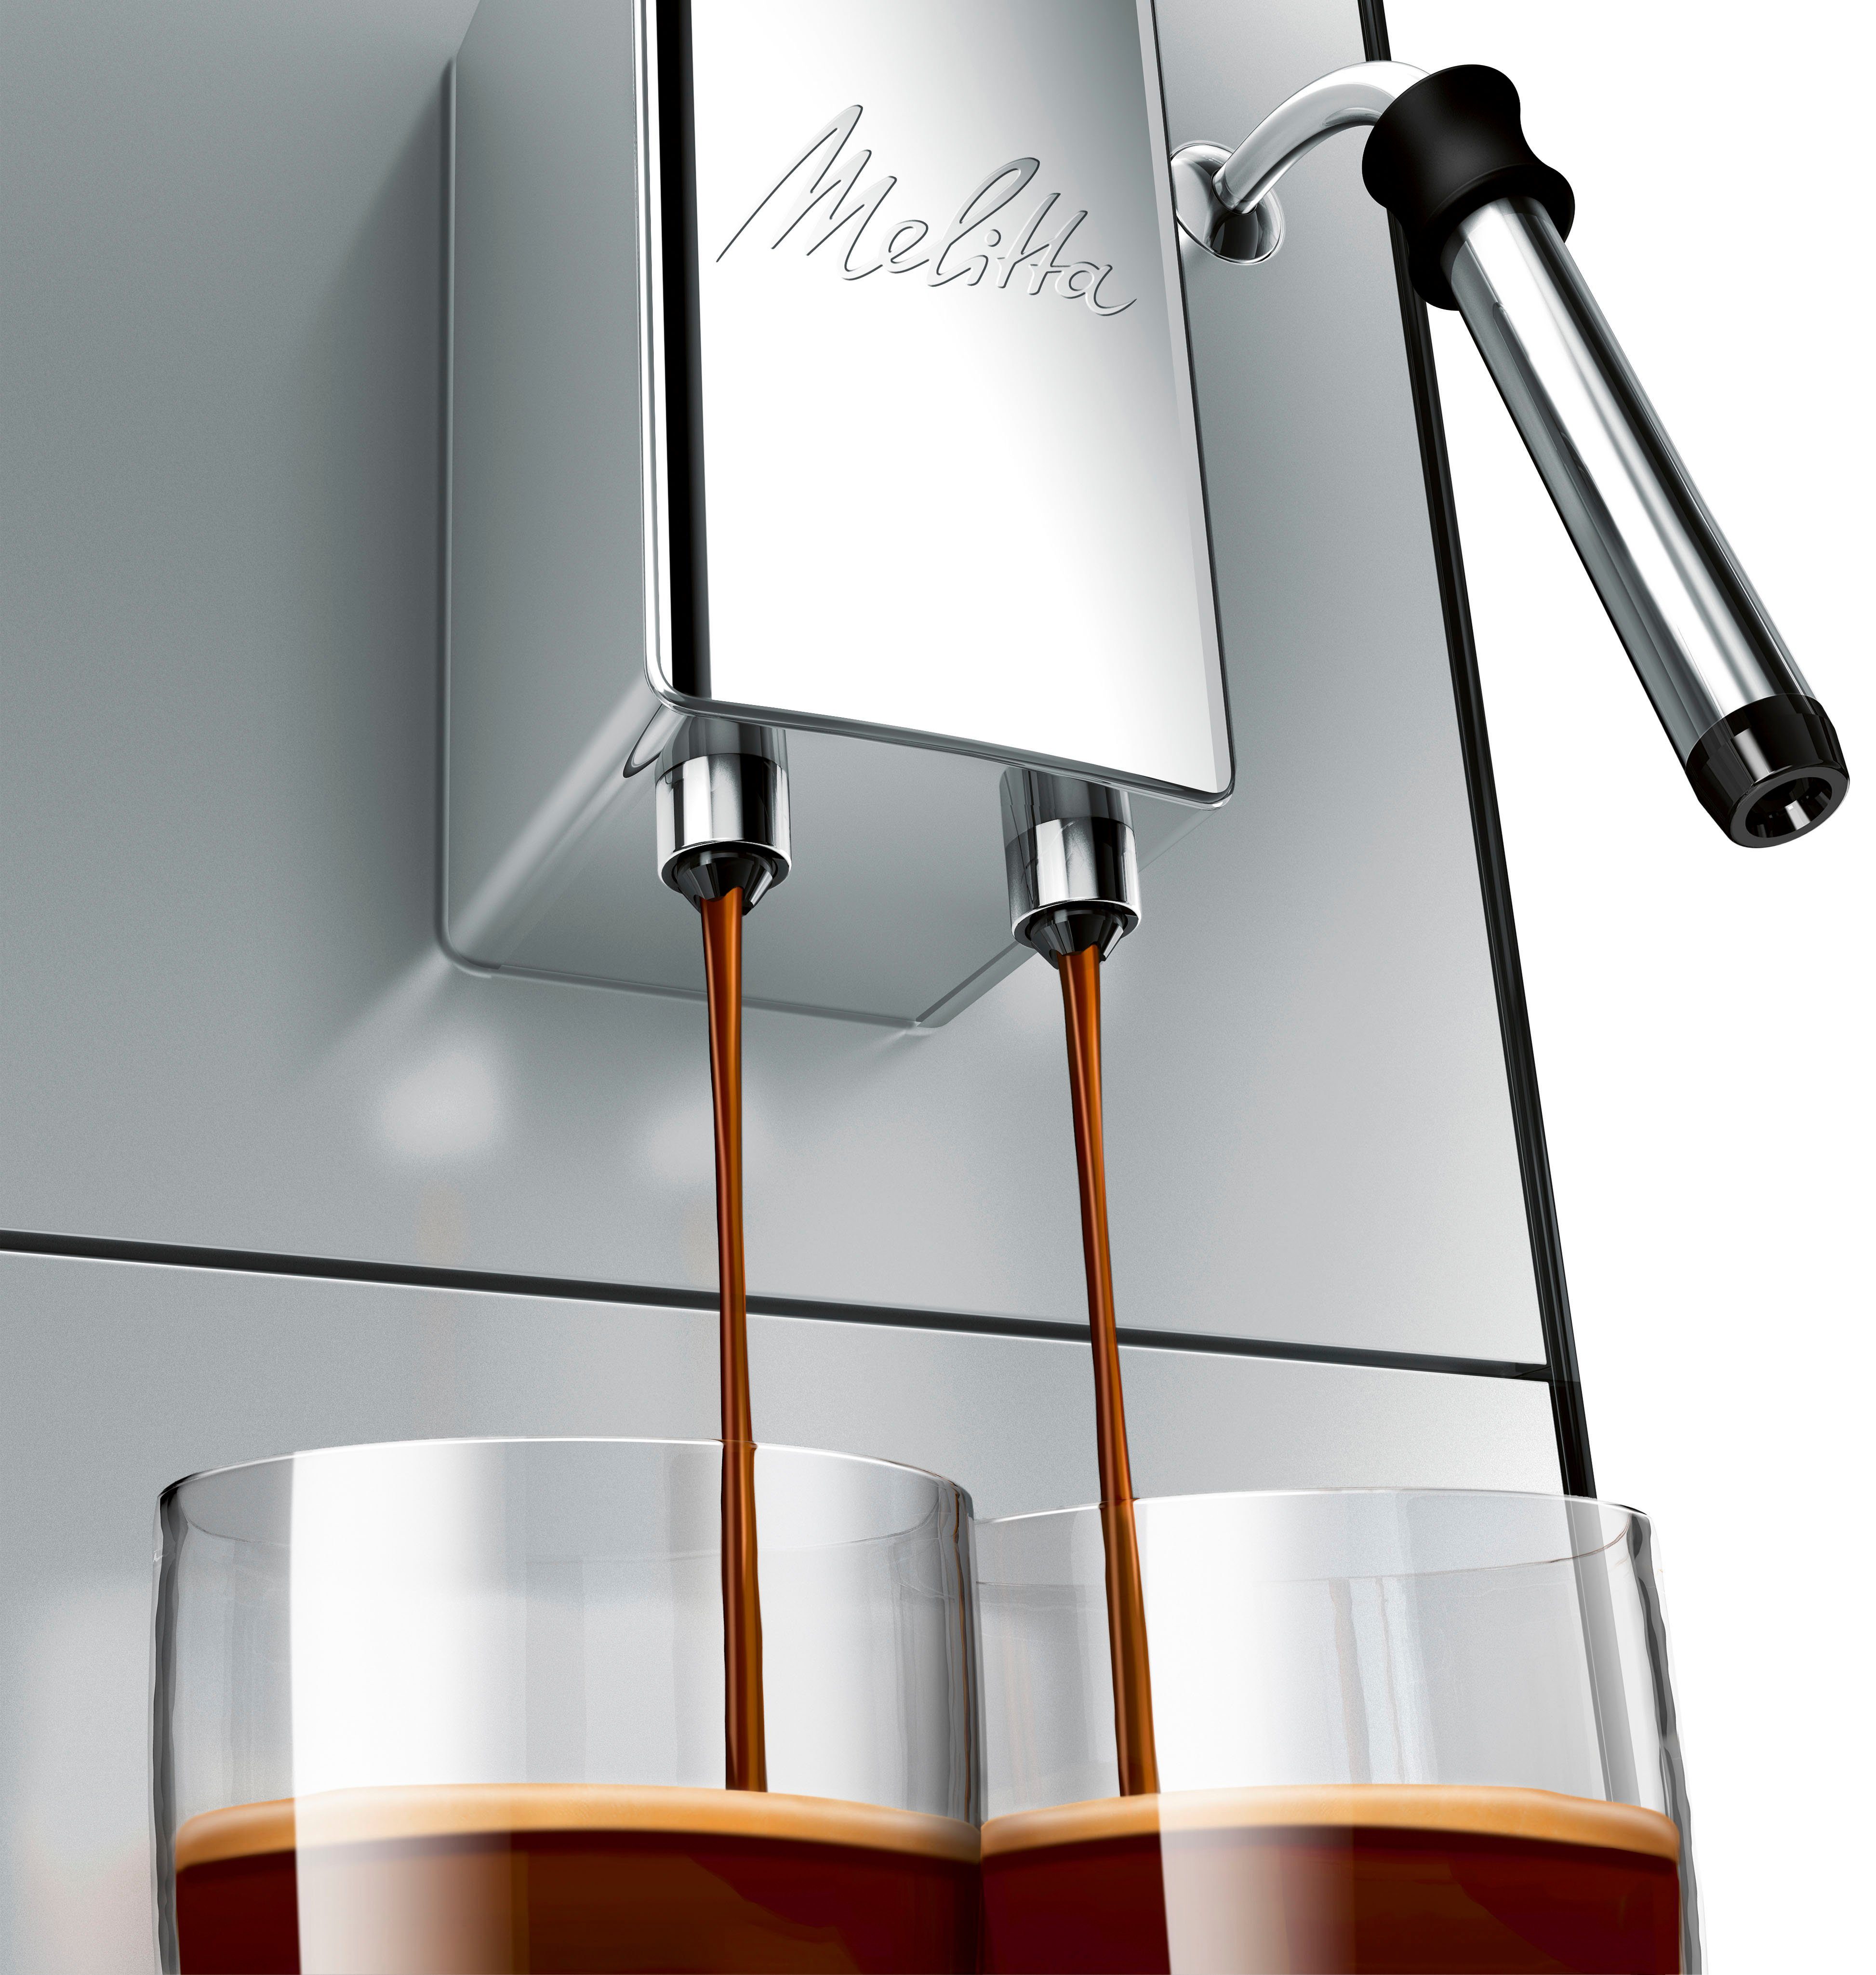 Café Solo® & Milchschaum Kaffeevollautomat silber/schwarz, crème Düse für One & Milk per Espresso E953-202, Melitta Touch,